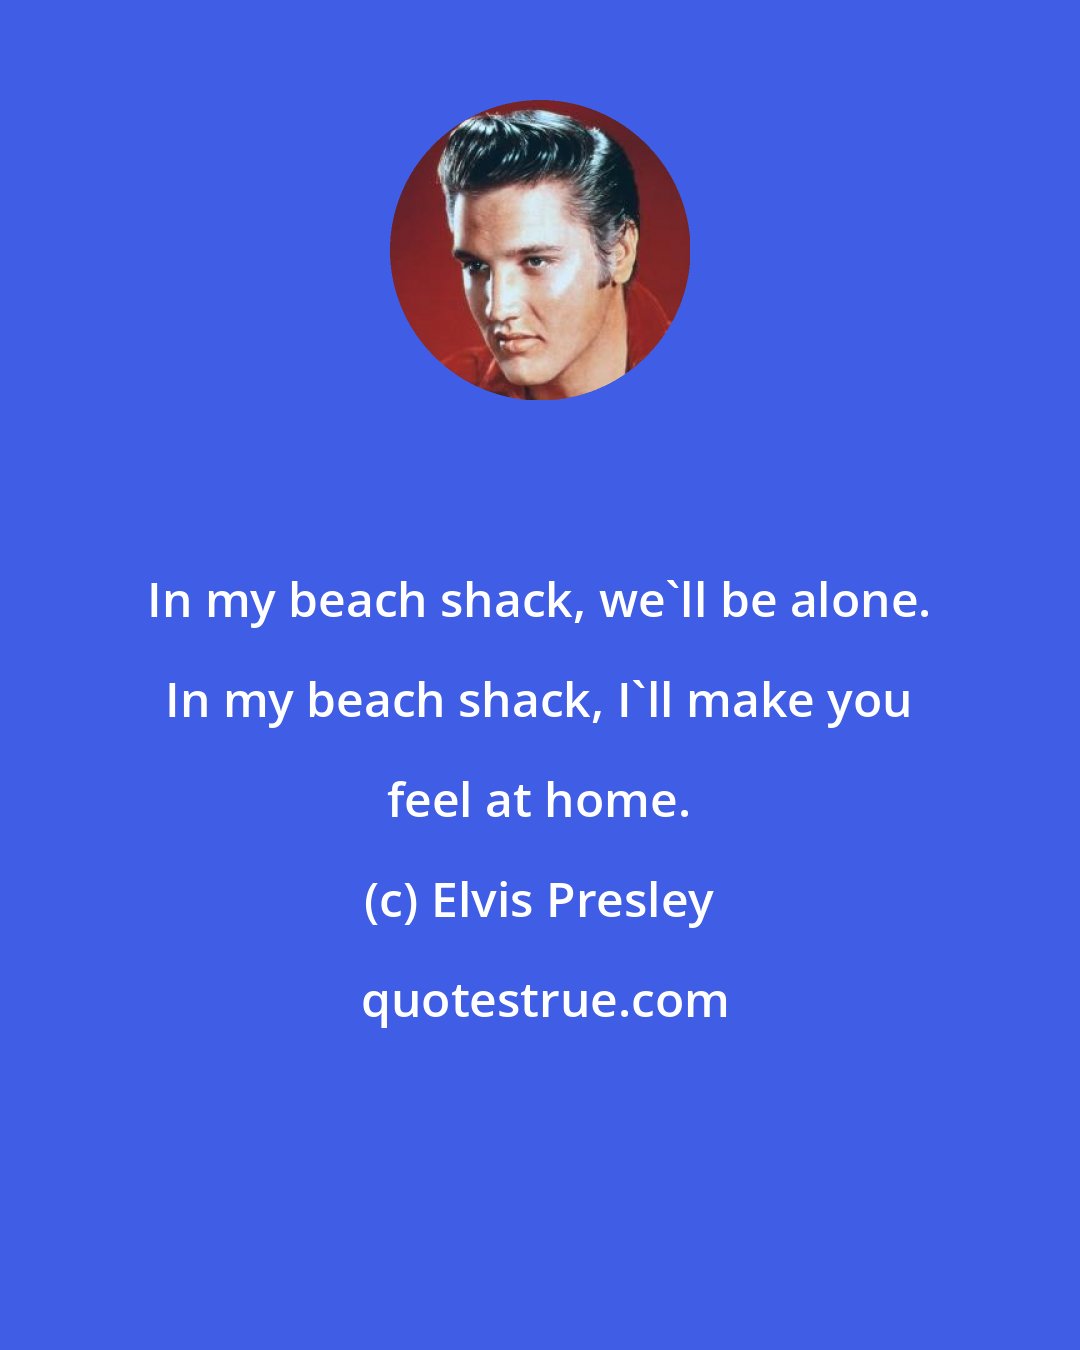 Elvis Presley: In my beach shack, we'll be alone. In my beach shack, I'll make you feel at home.